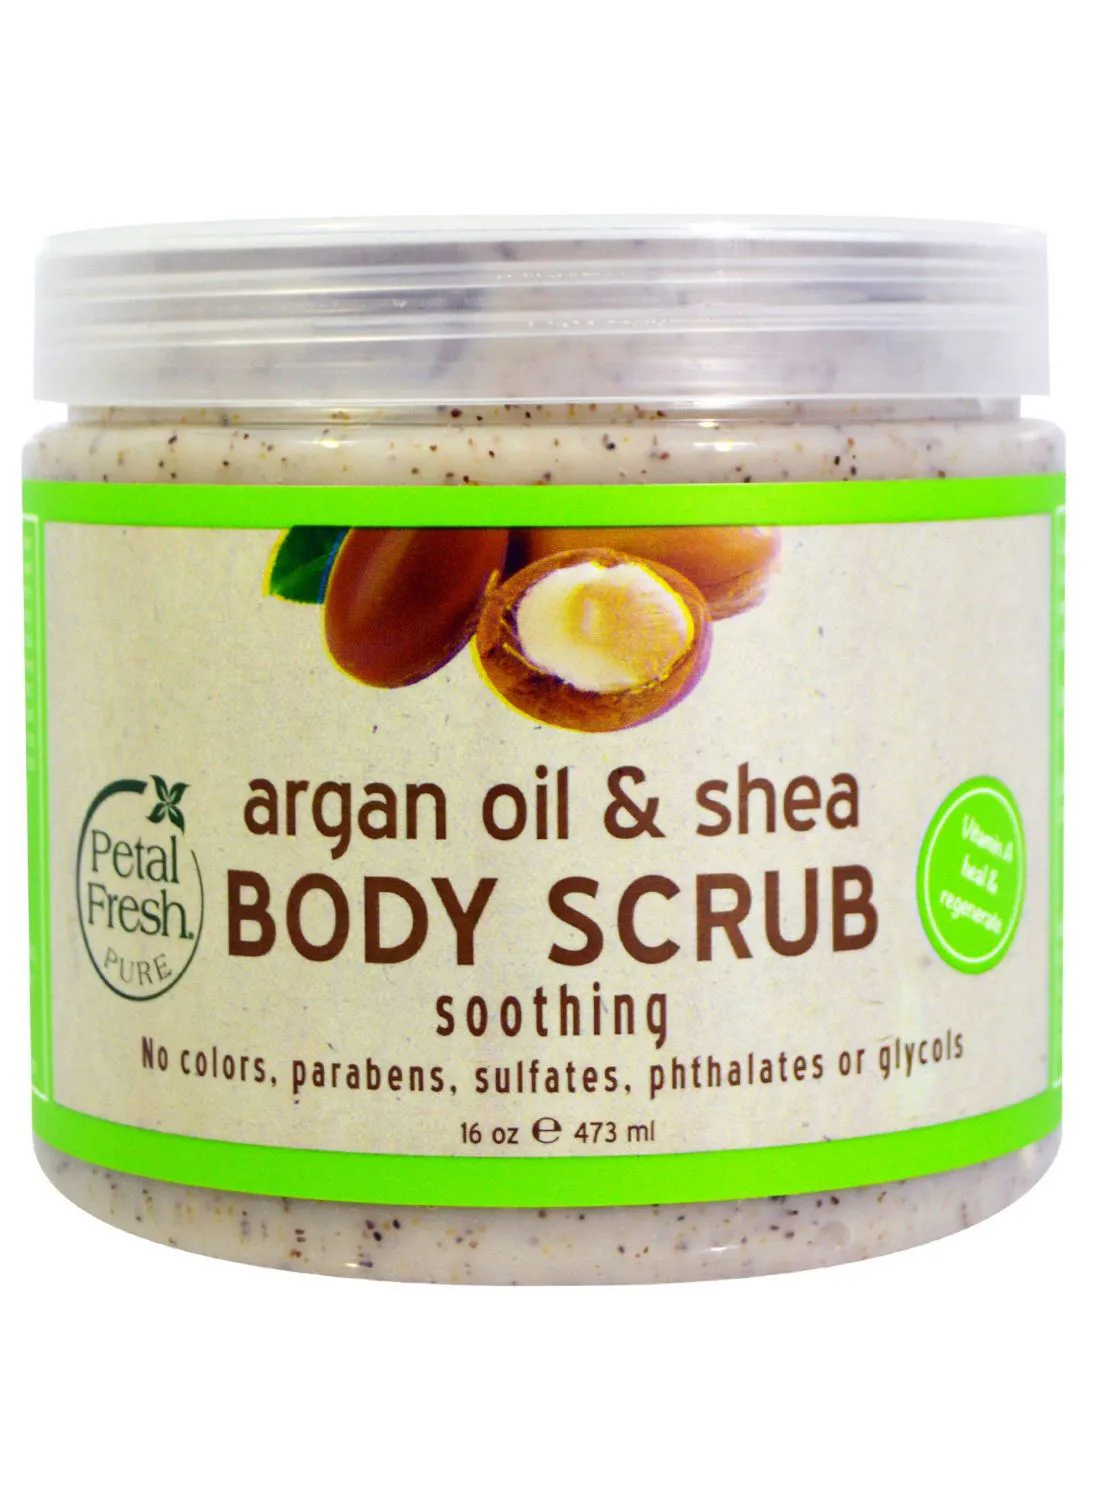 Petal fresh Pure Argan Oil And Shea Body Scrub 473ml